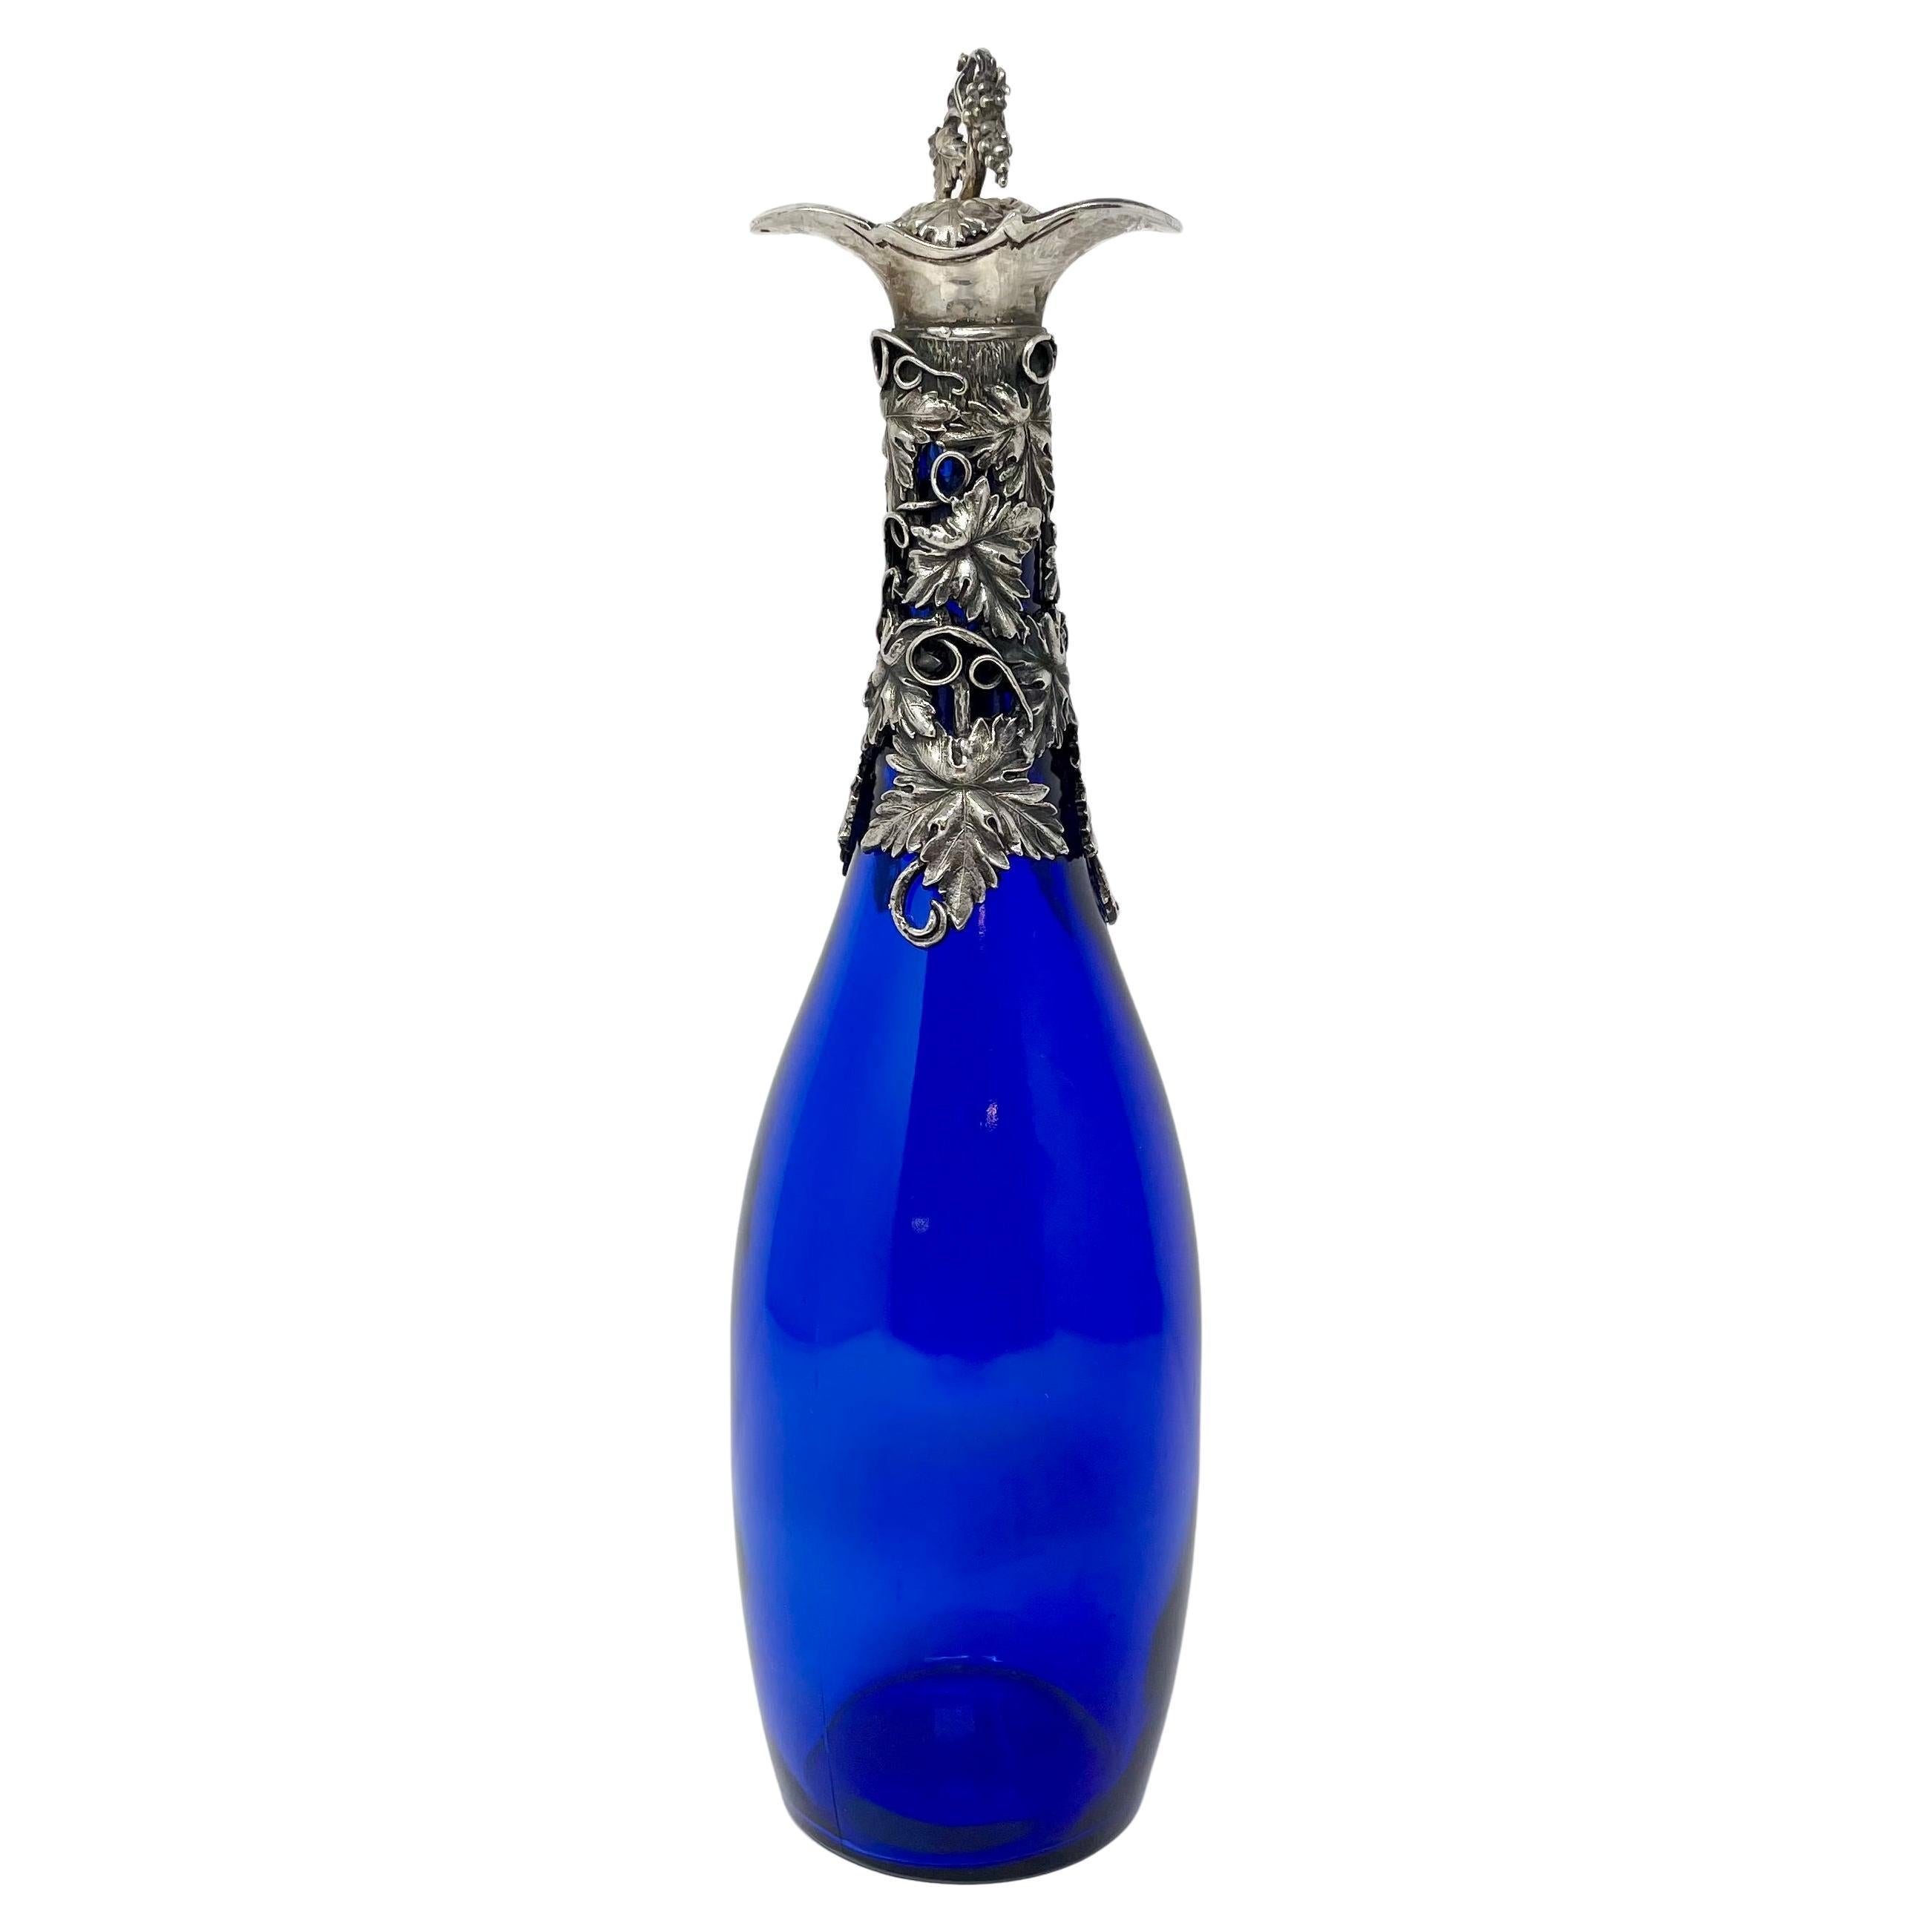 Antique cobalt blue glass liquor bottle with sterling silver top, circa 1890-1900.